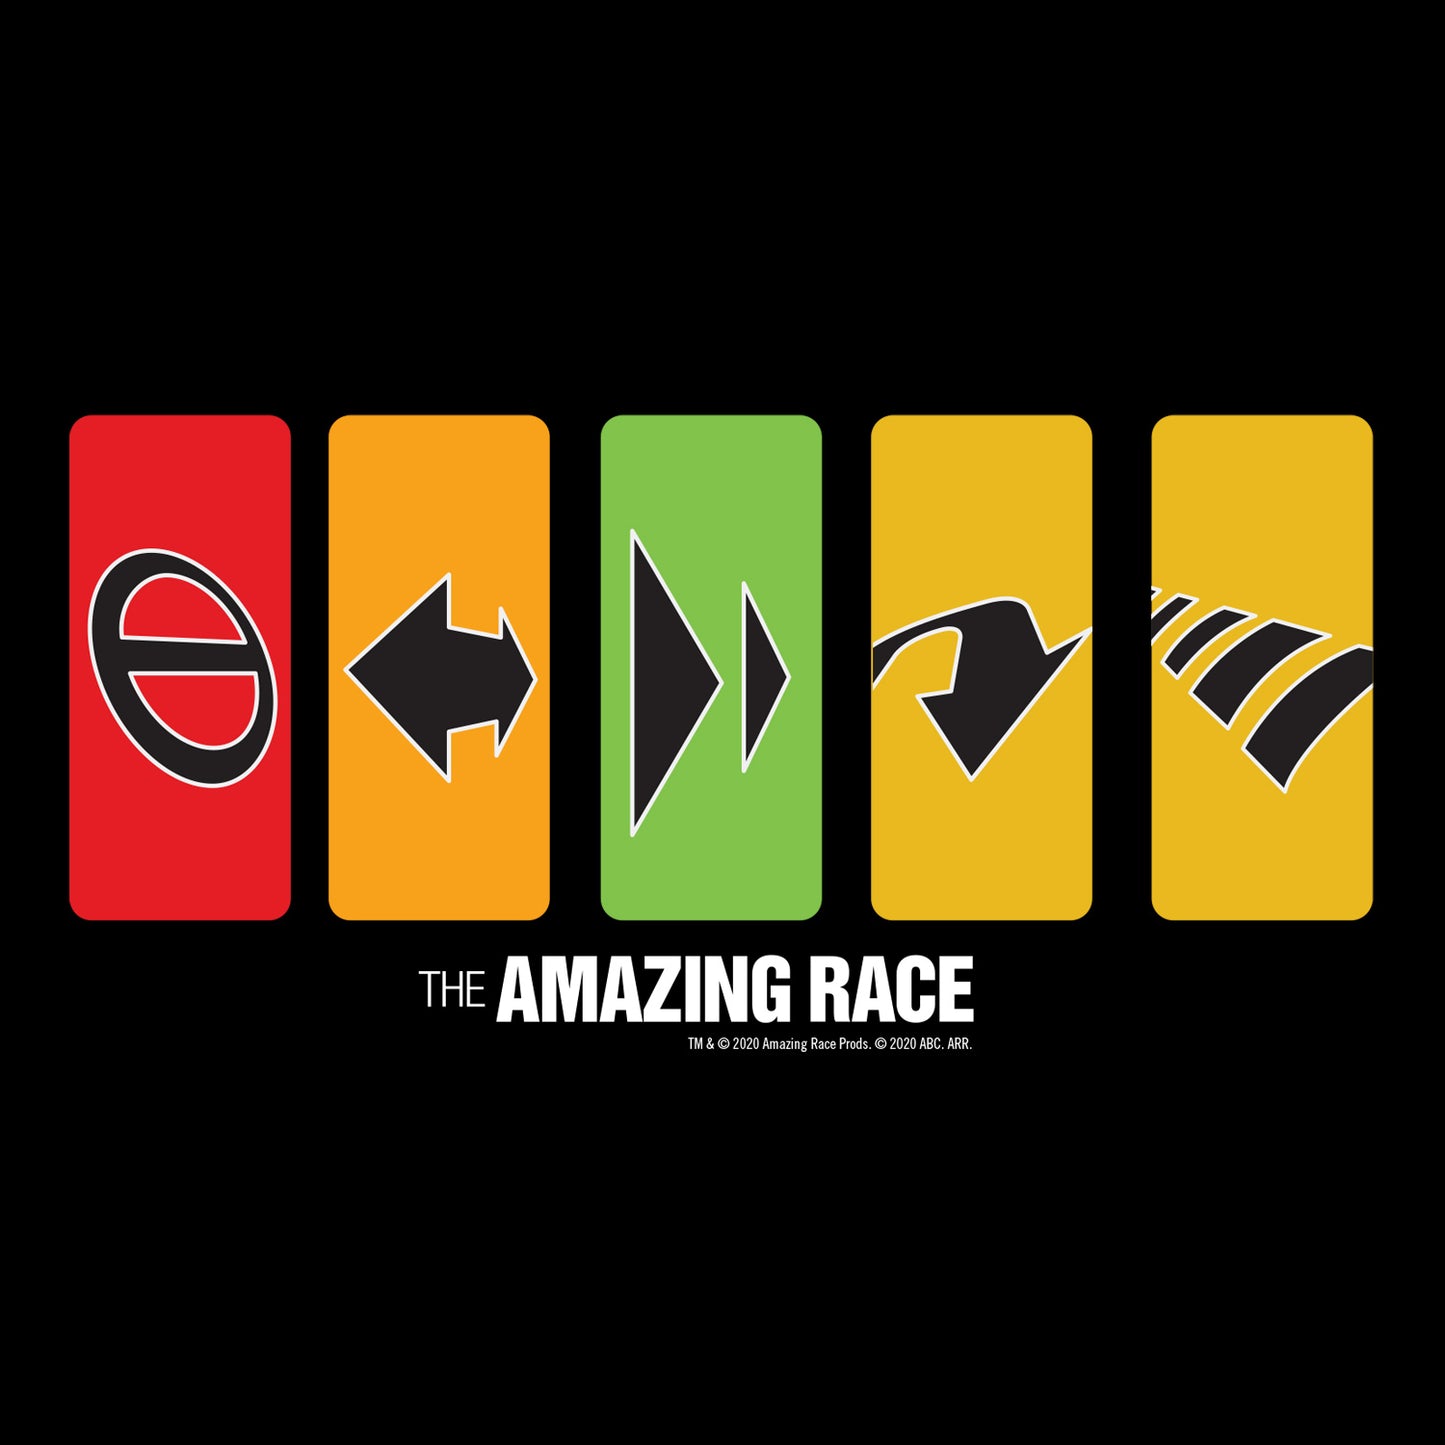 The Amazing Race Race Clues 17 oz Pint Glass